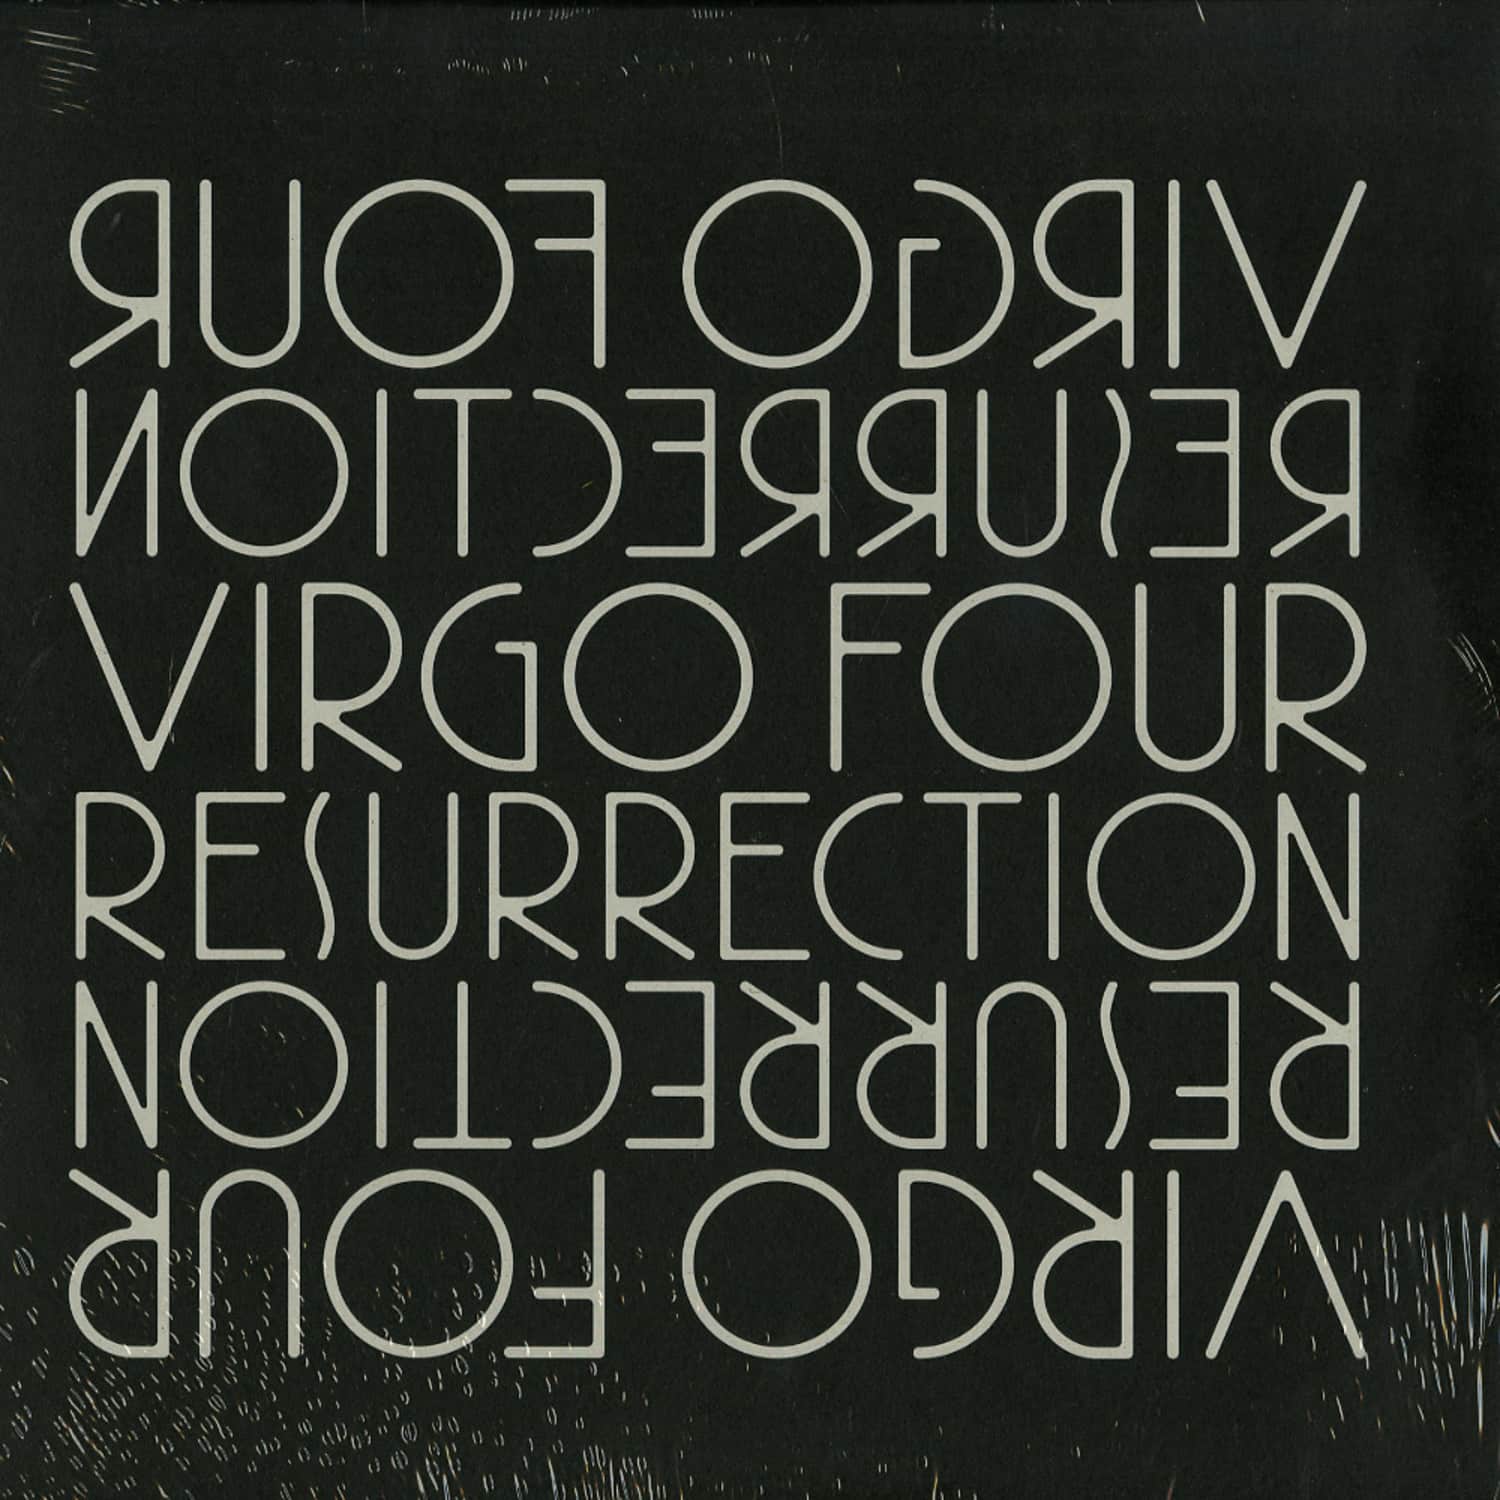 Virgo Four - RESURRECTION 